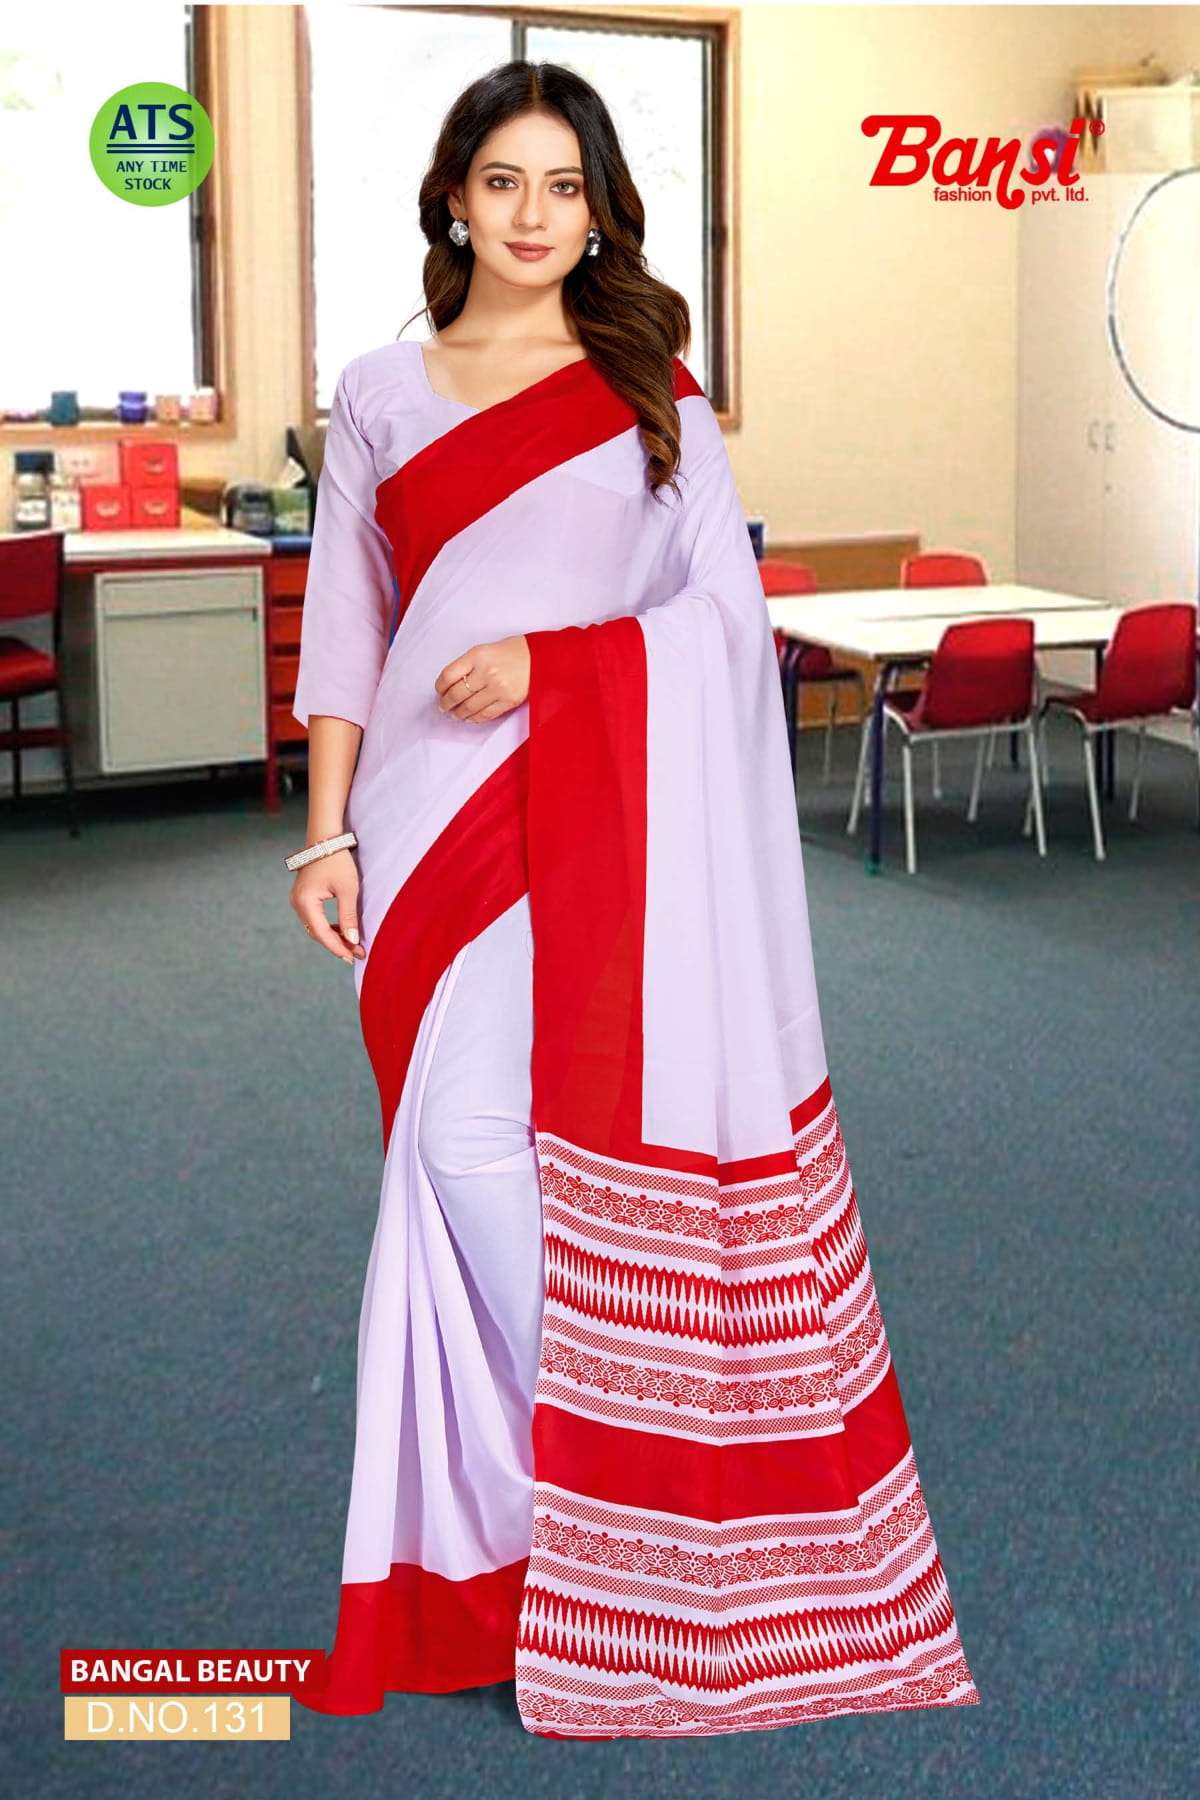 bansi bangal beauty micro georgette uniform saree best place in surat 